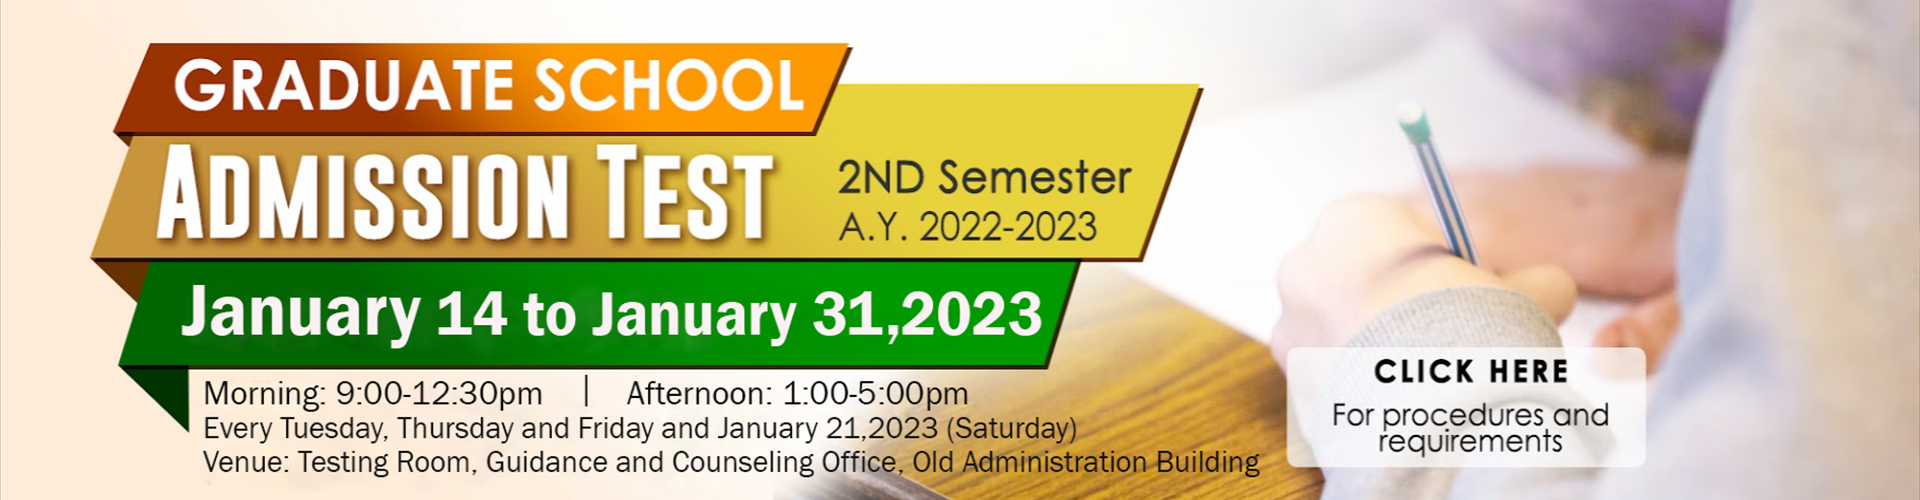 Graduate School Admission Test 2nd Semester A.Y 2022-2023